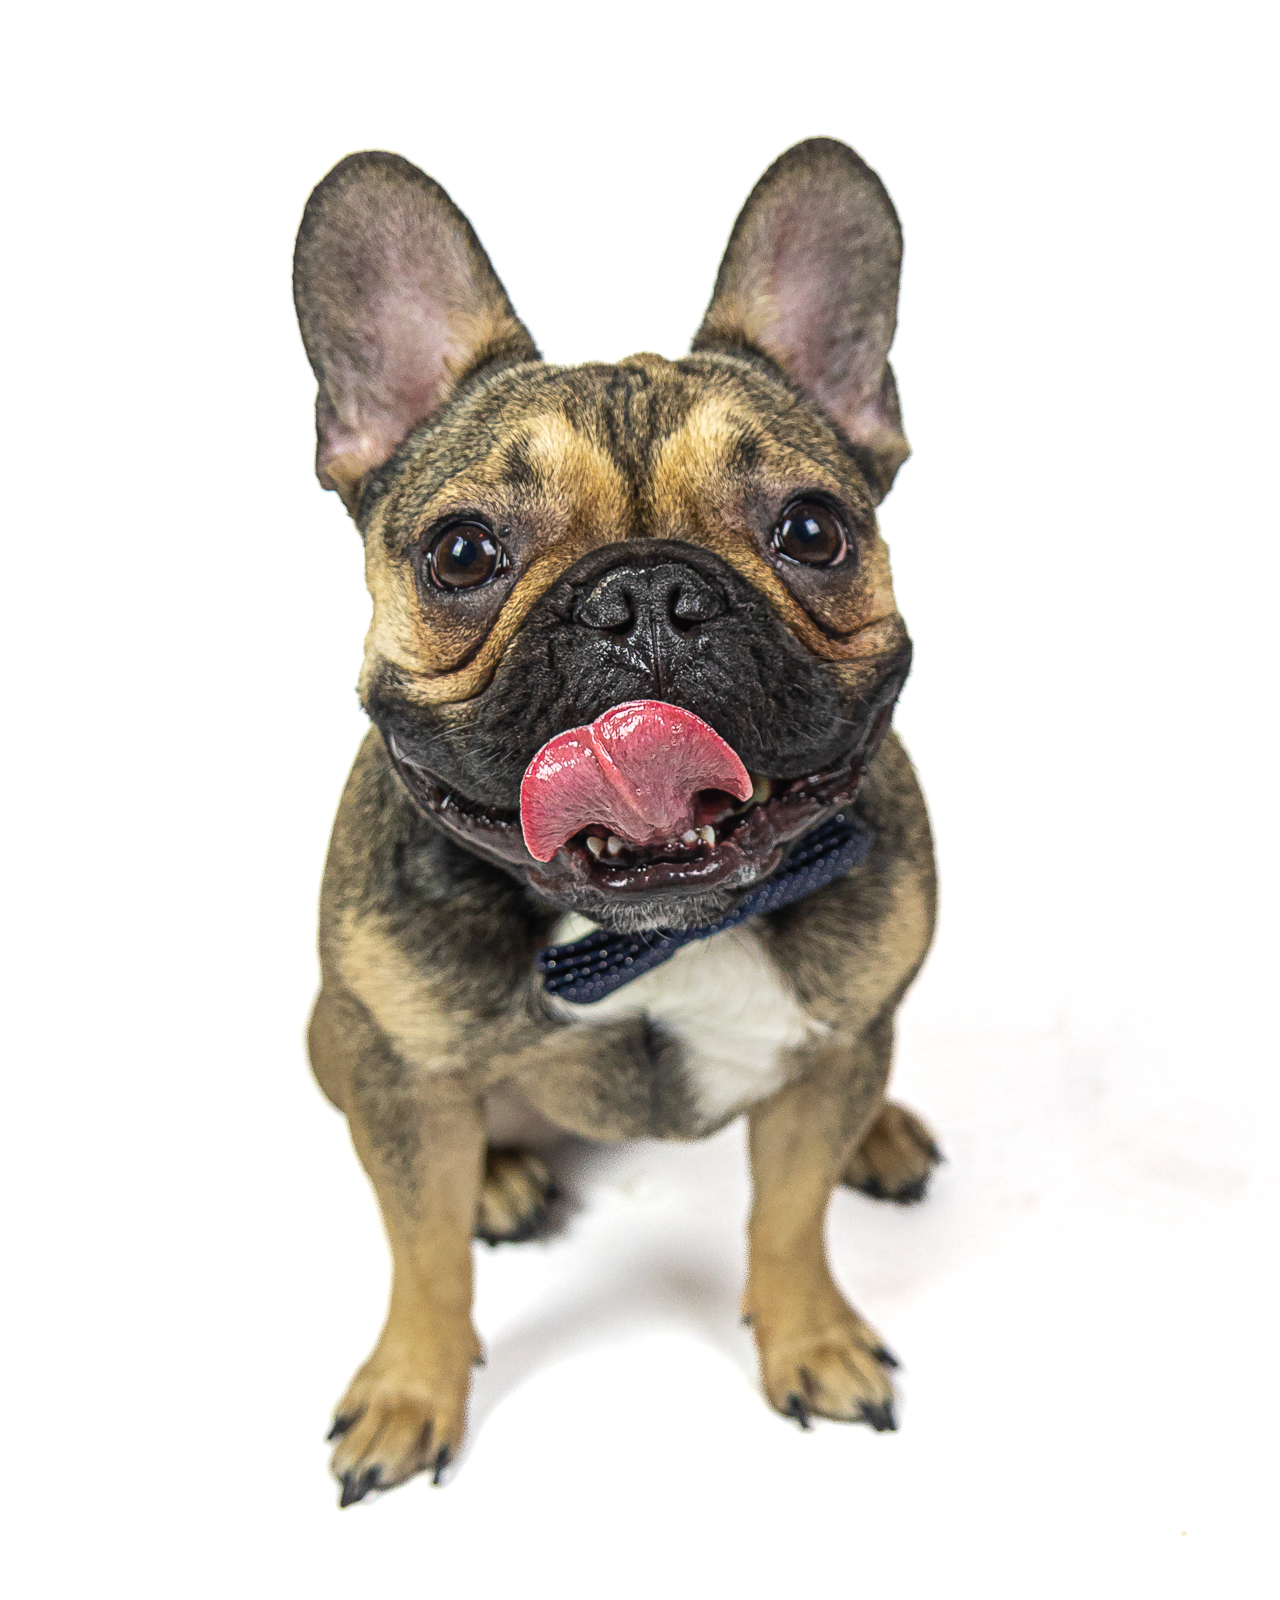 french bulldog dog portrait photography in studio.JPG